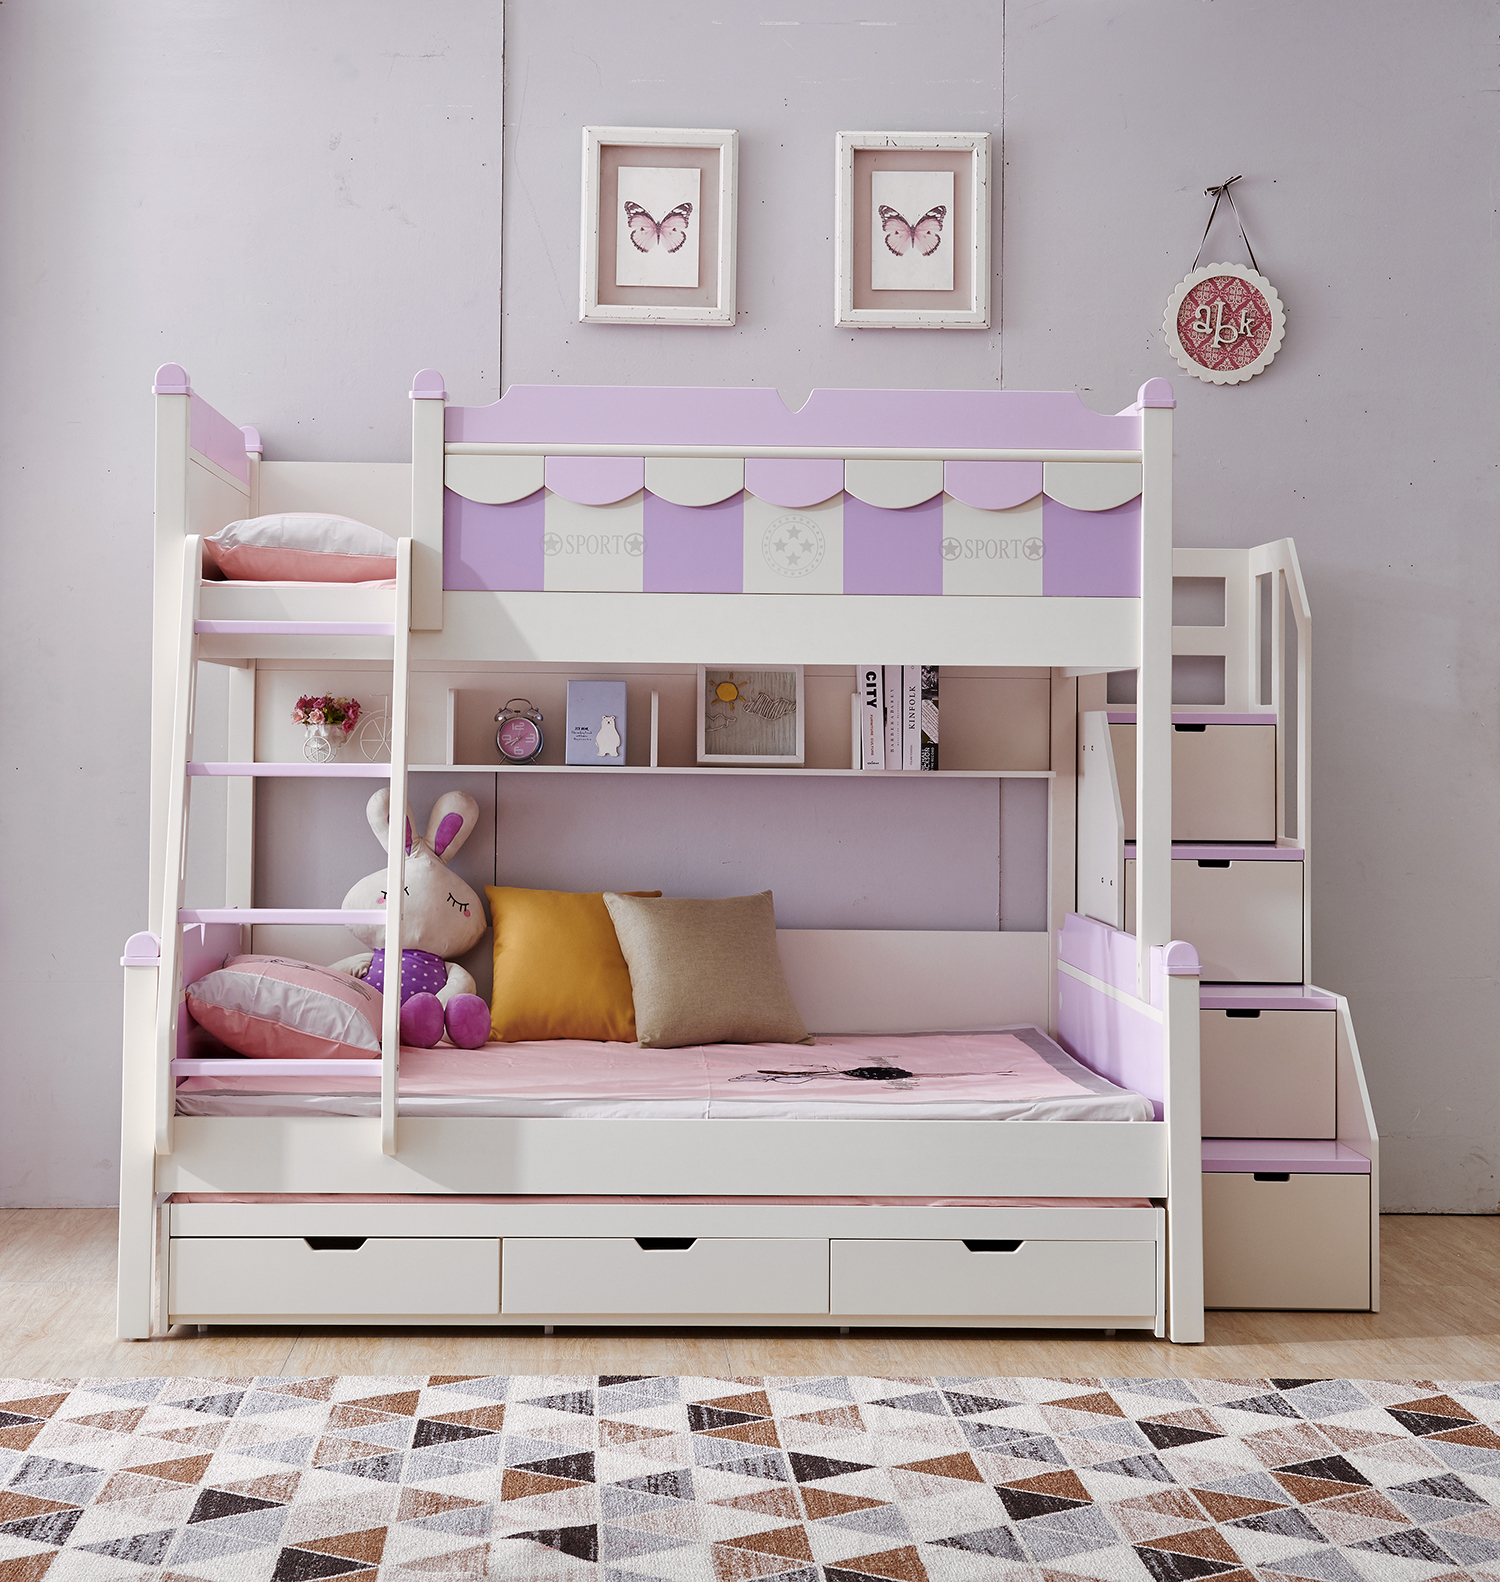 expand counter climax Paturi supraetajate dormitor copii cu sertare depozitare si dulap scara